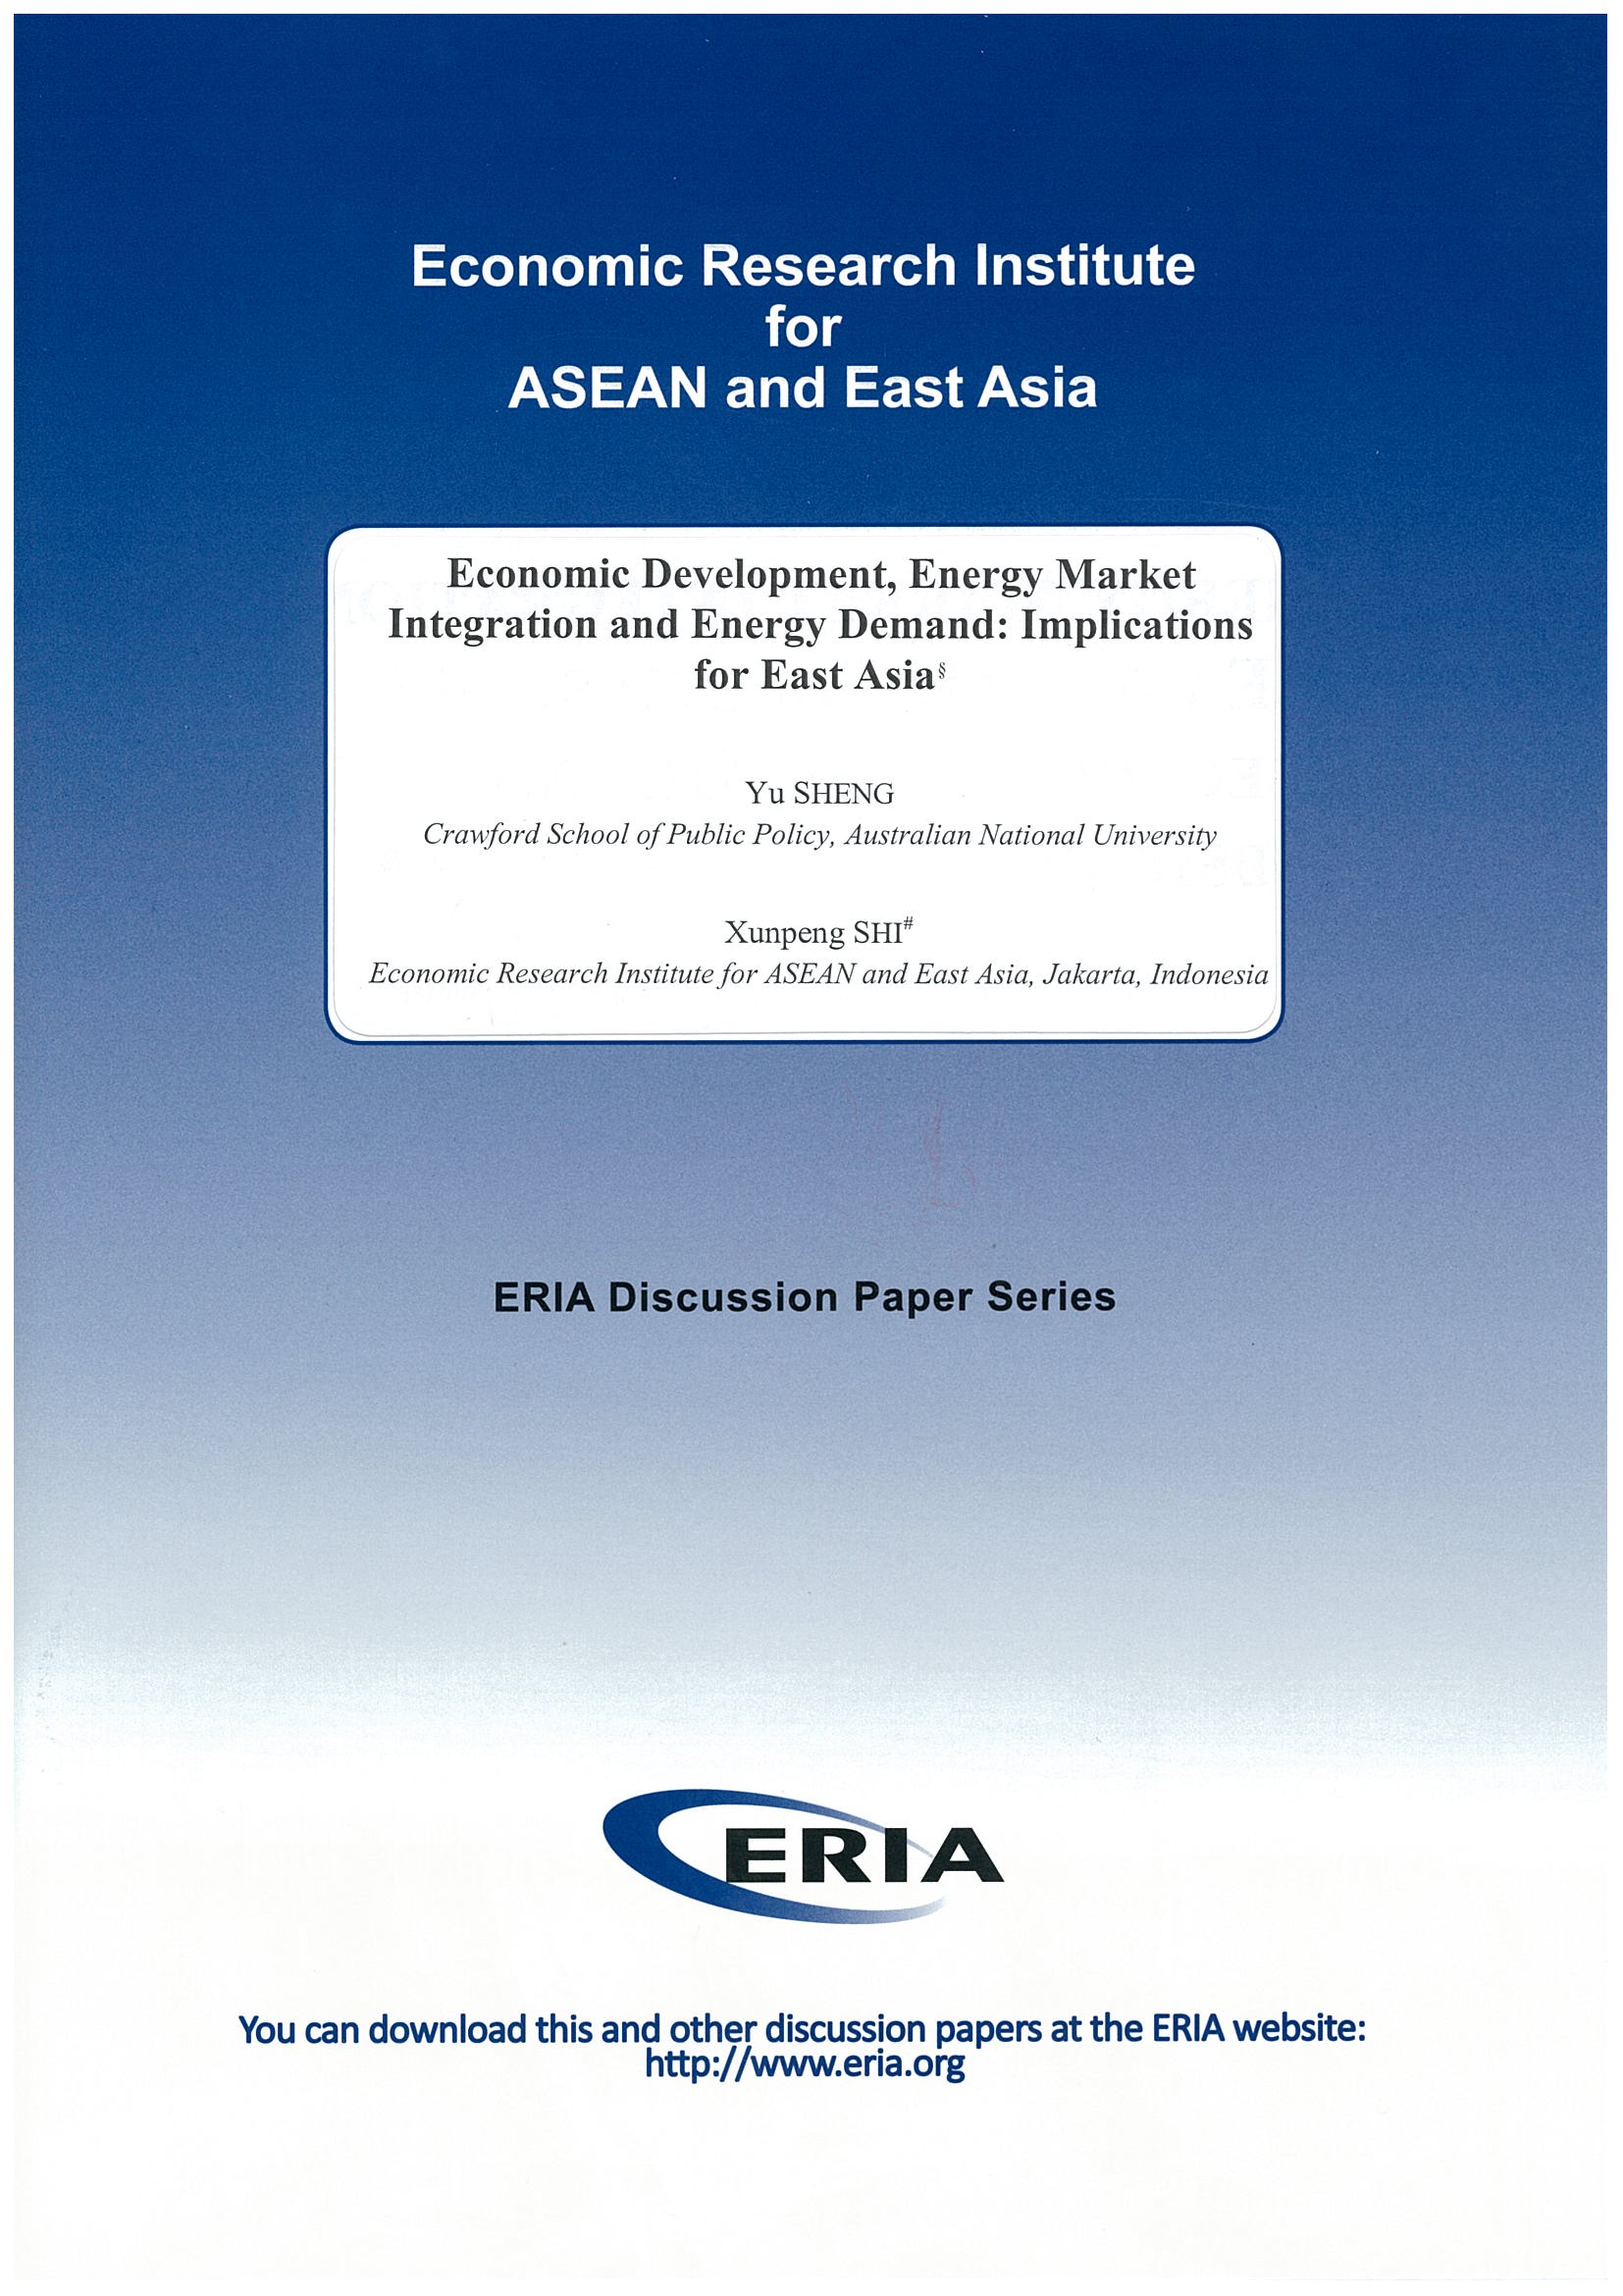 Economic Development, Energy Market Integration and Energy Demand: Implications for East Asia